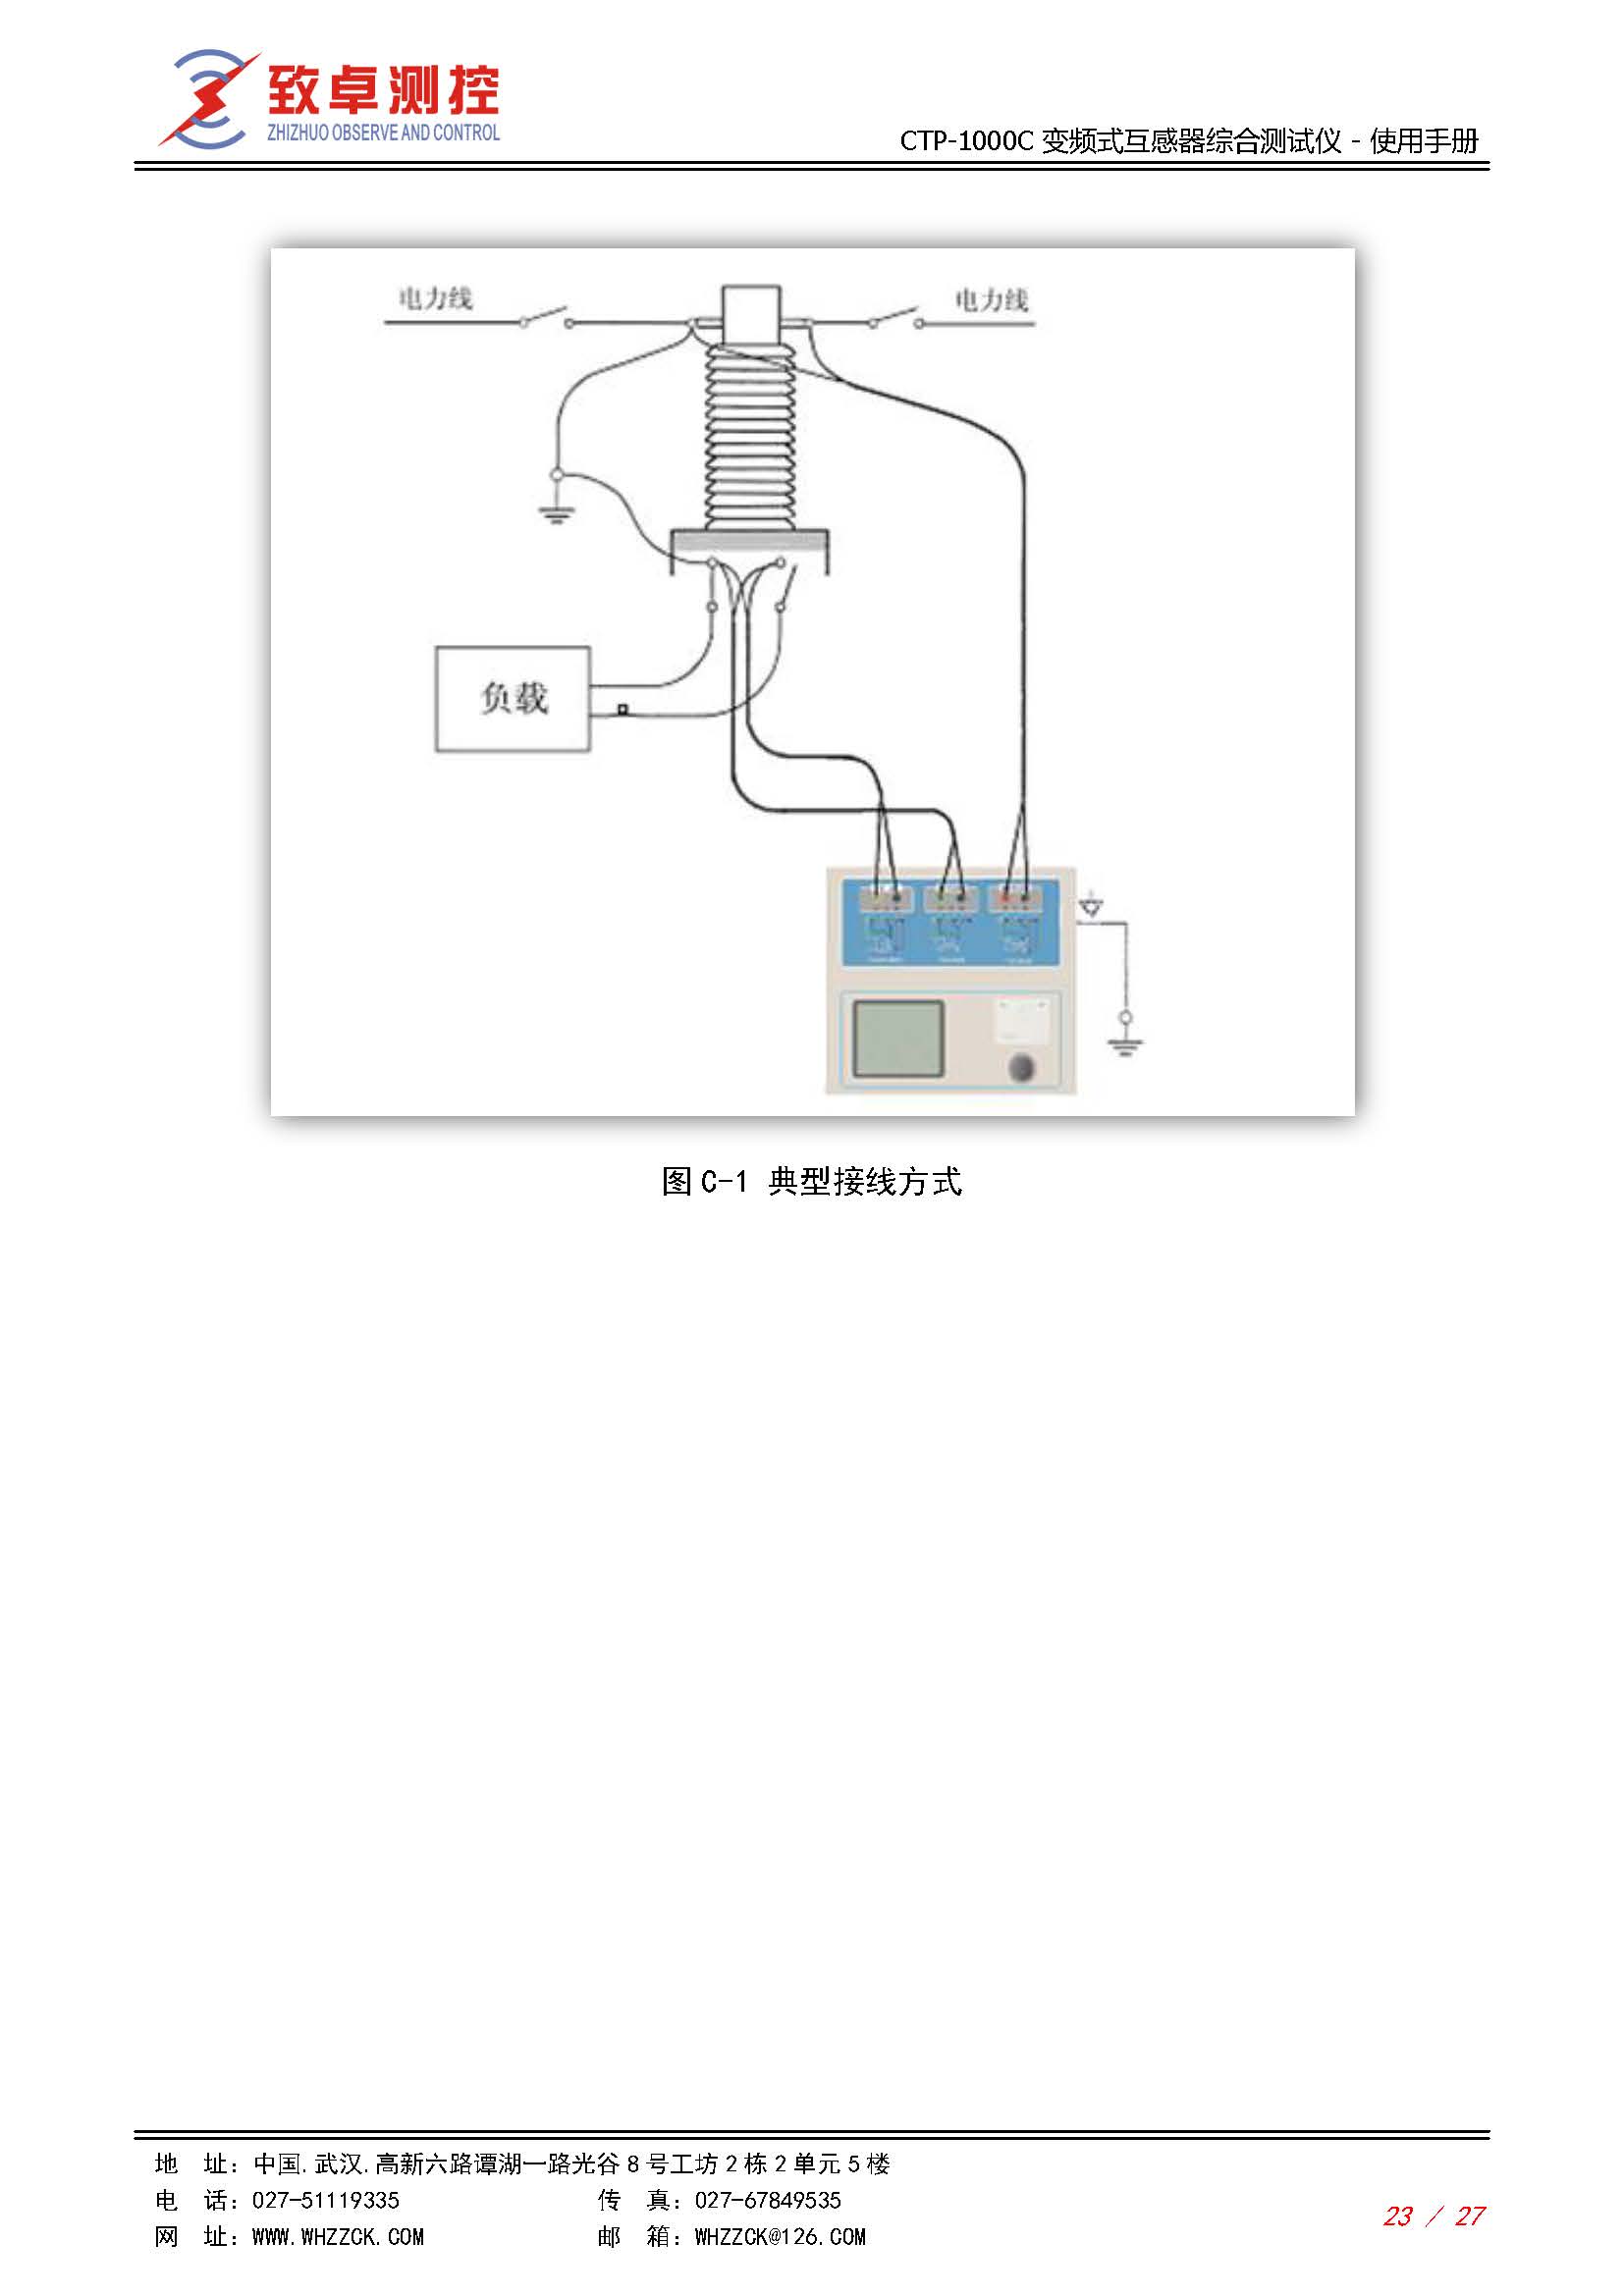 CTP-1000C 变频式互感器综合测试仪使用说明书(图23)